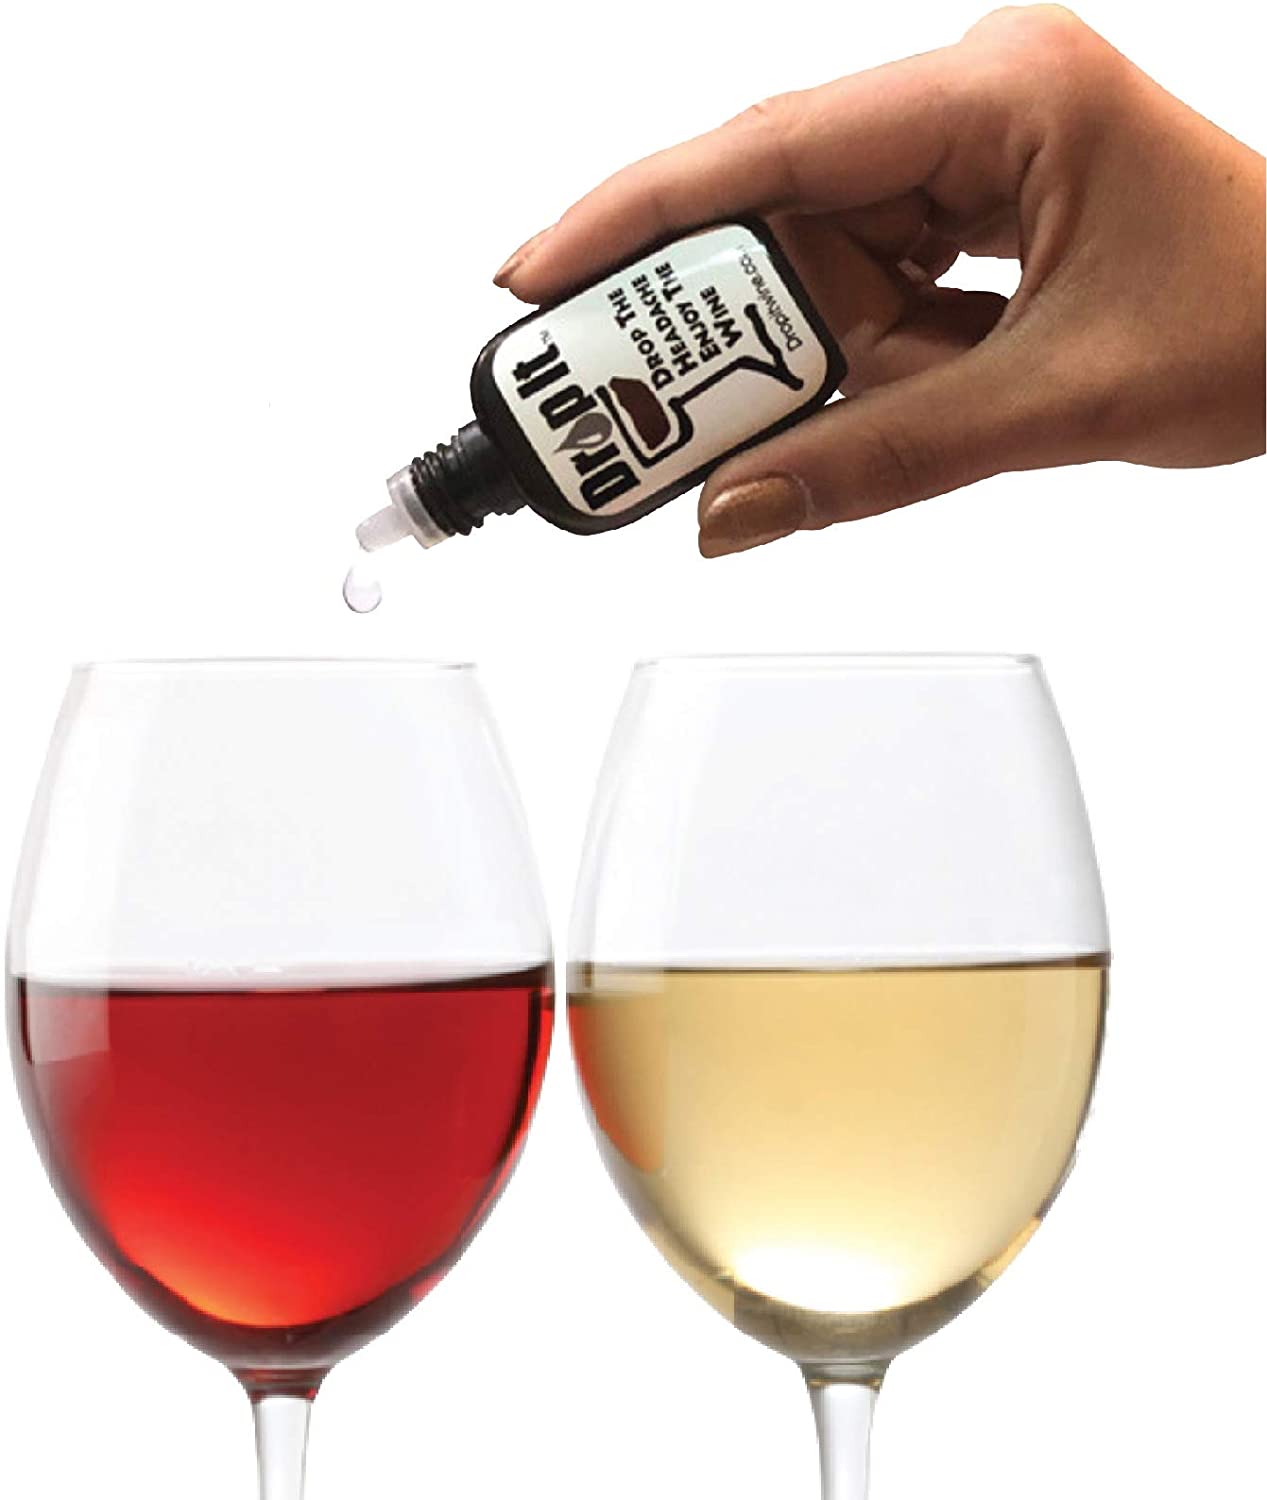 drop it - wine hangover prevention